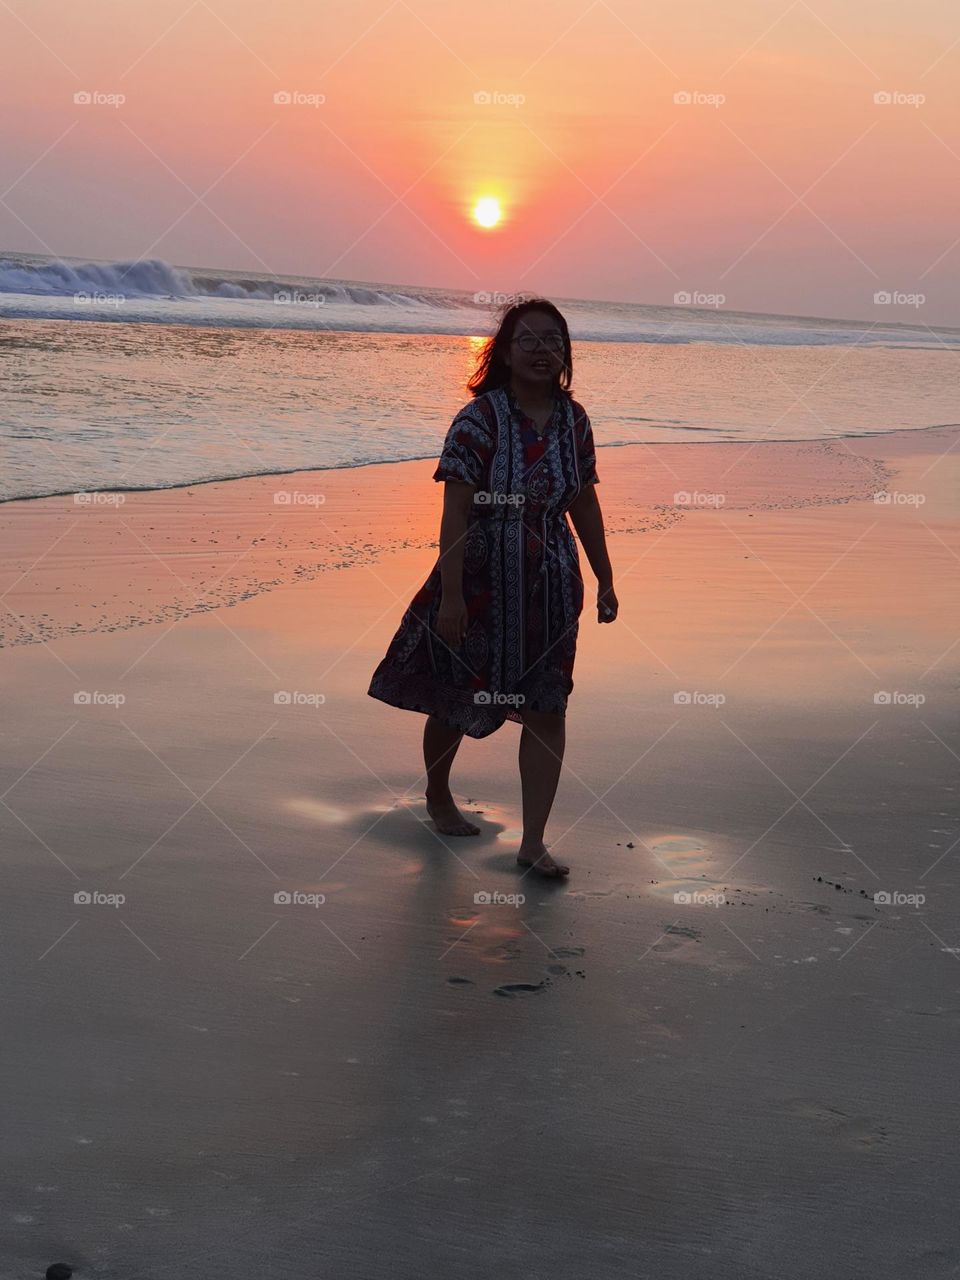 At sunset walking alone at the beach